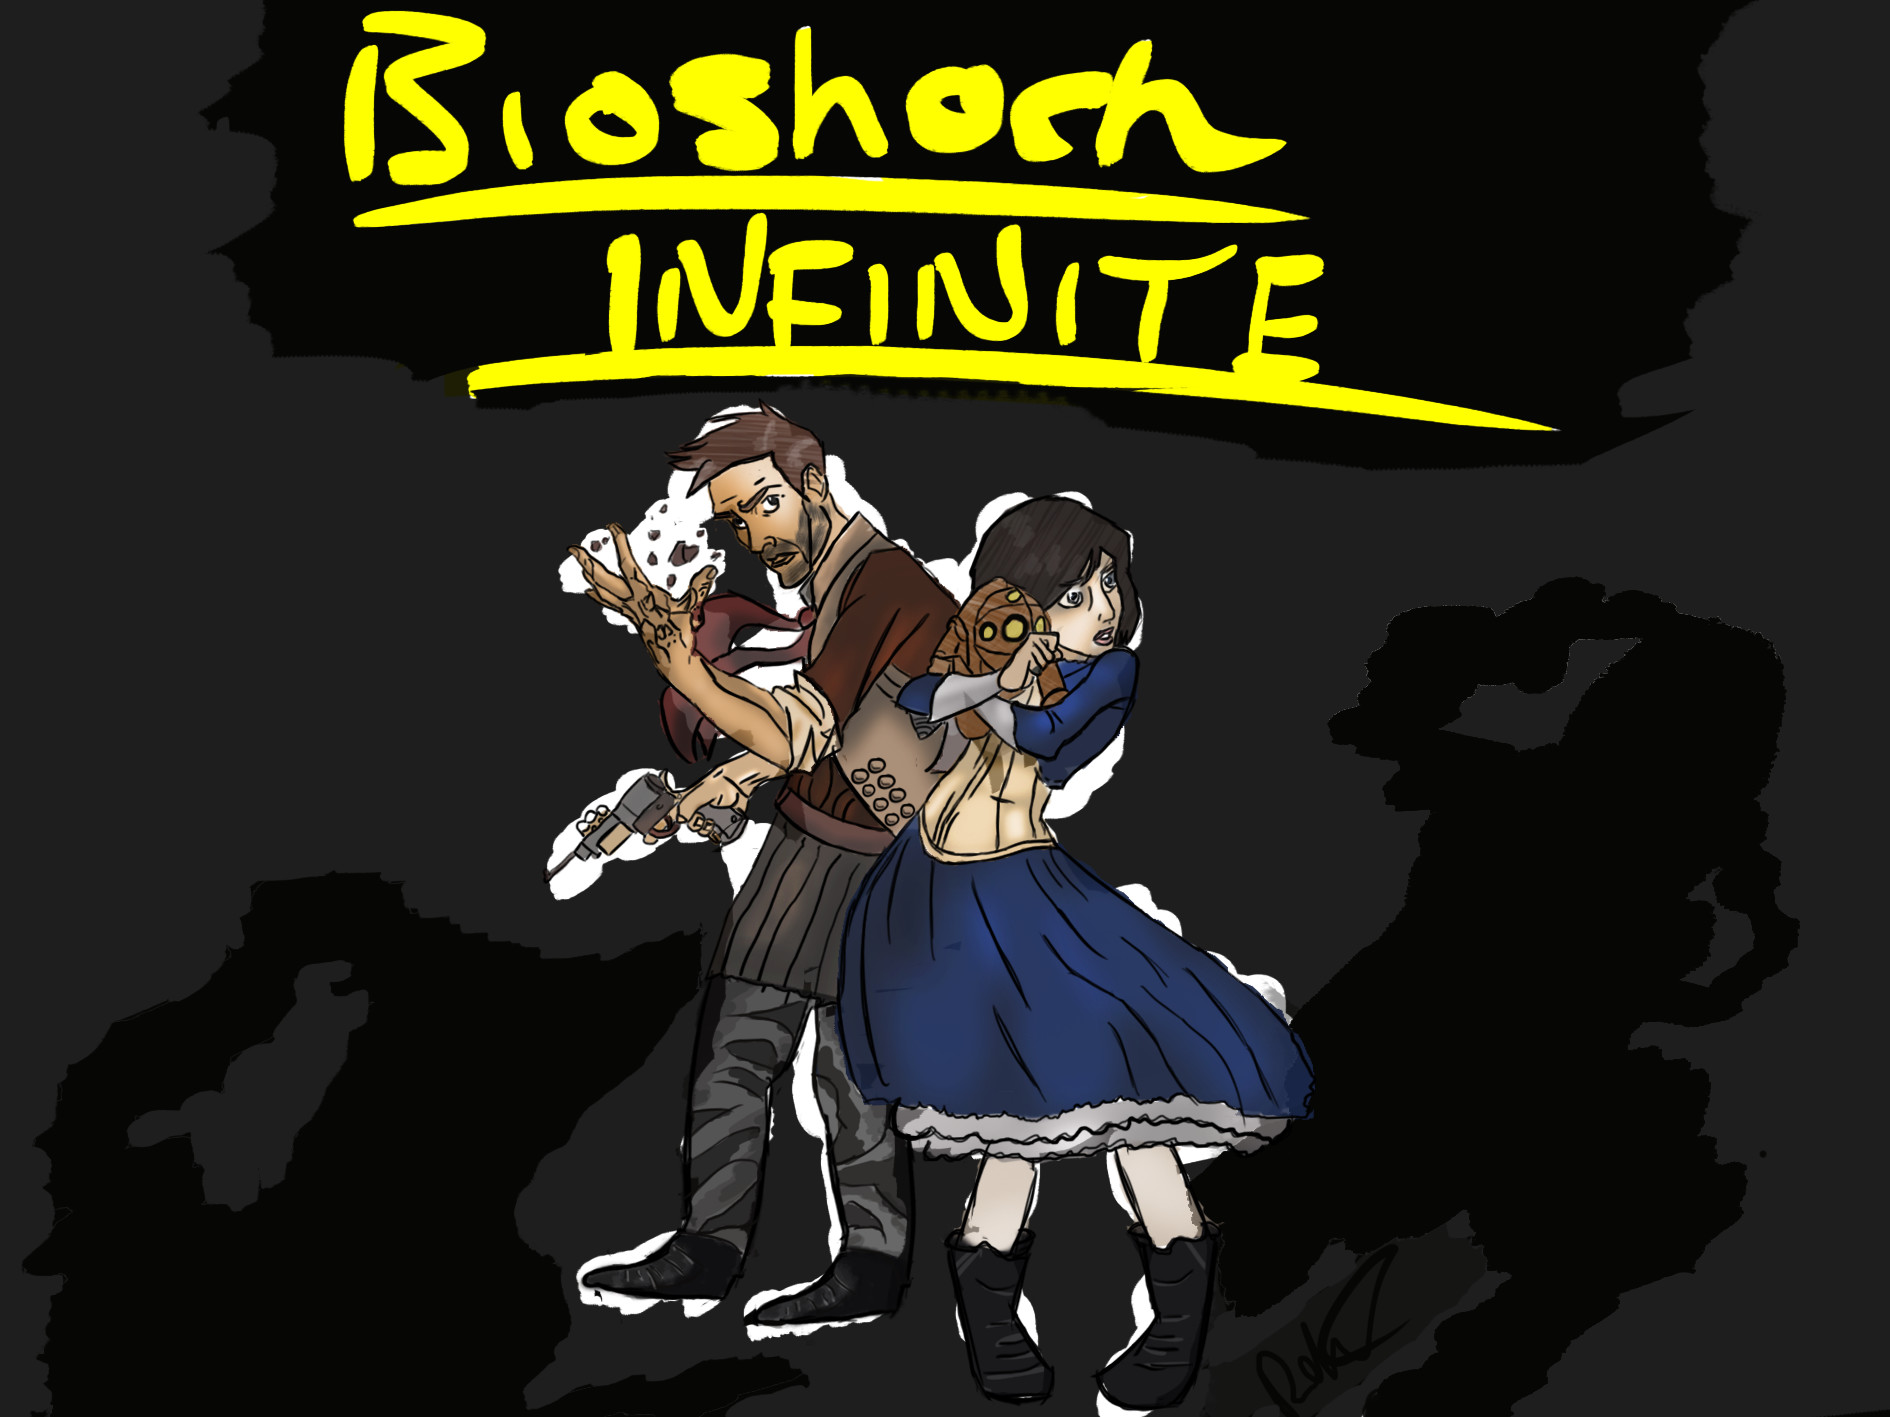 Elizabeth from Bioshock Infinite VS Breach from Generator Rex